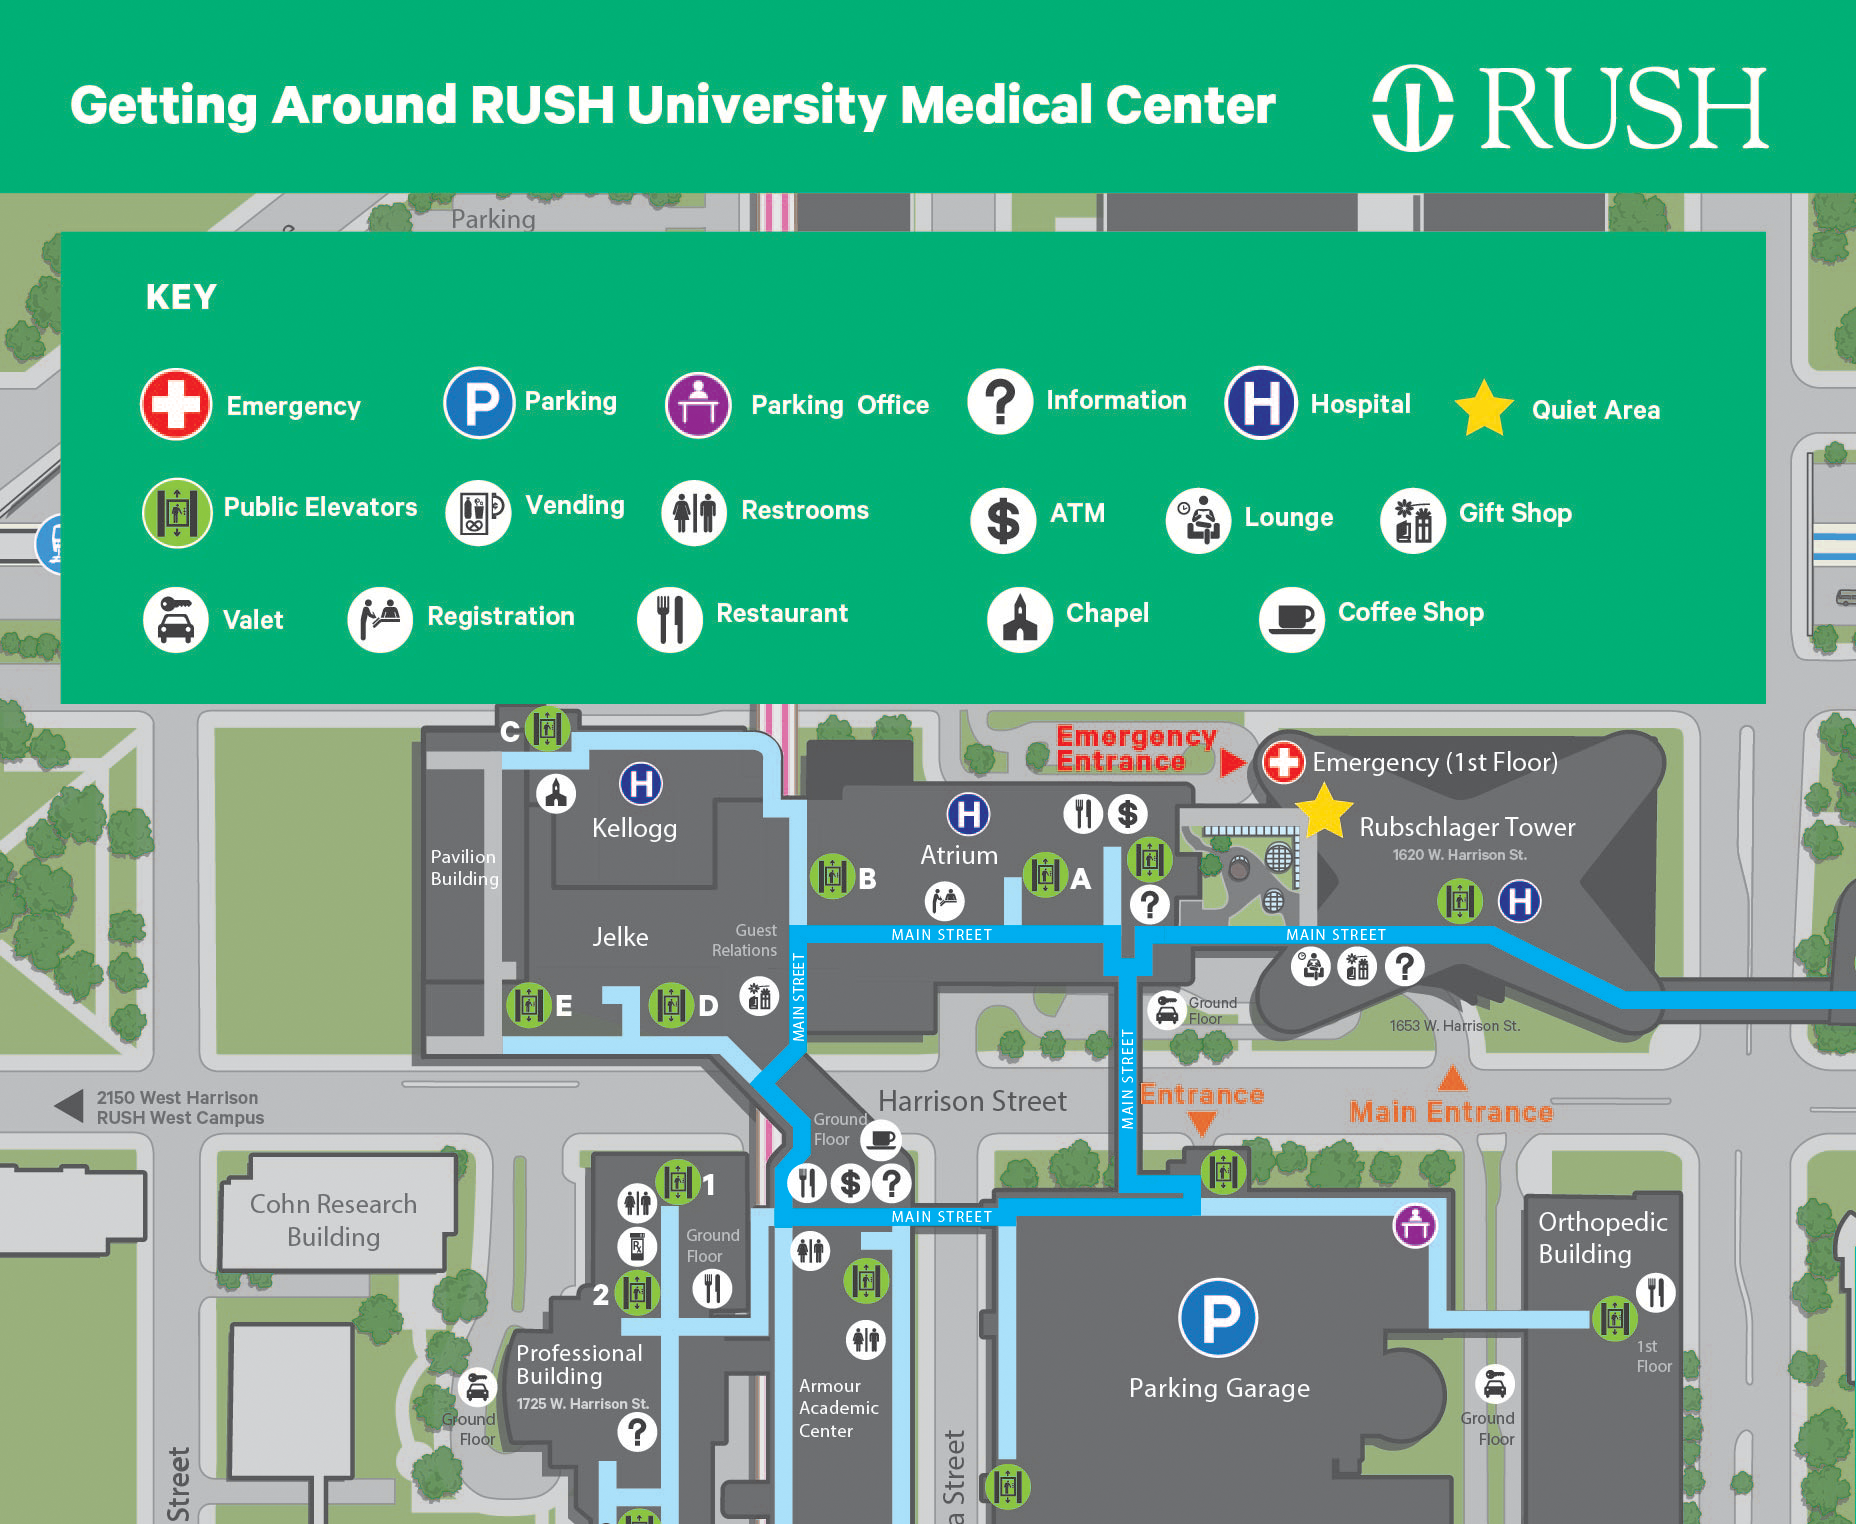 RUSH University Medical Center Campus Map